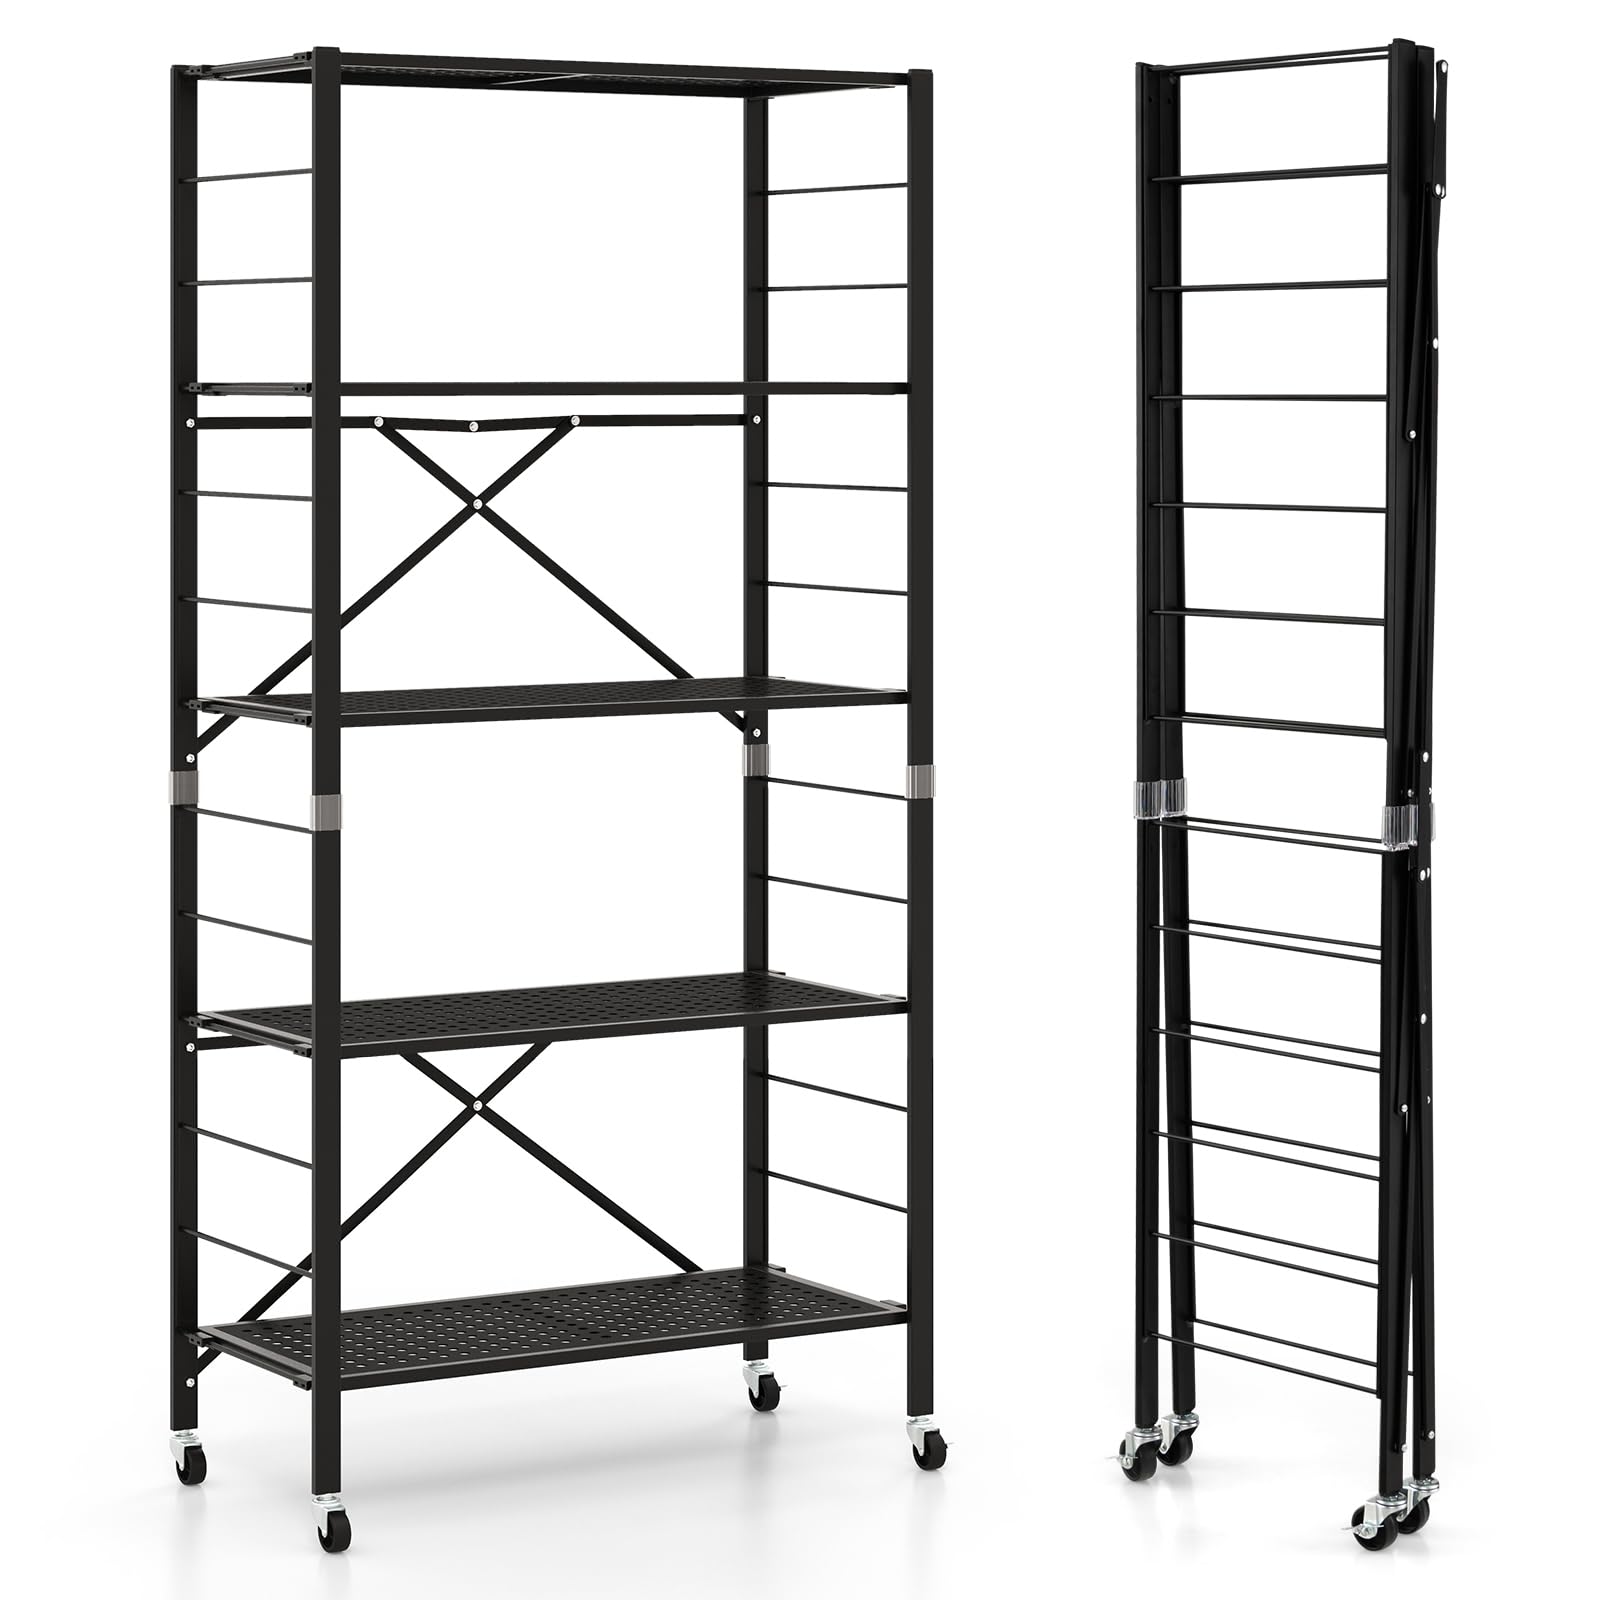 Giantex 5-Tier Folding Bookshelf with Wheels Black, 60" Tall Foldable Metal Shelves for Storage